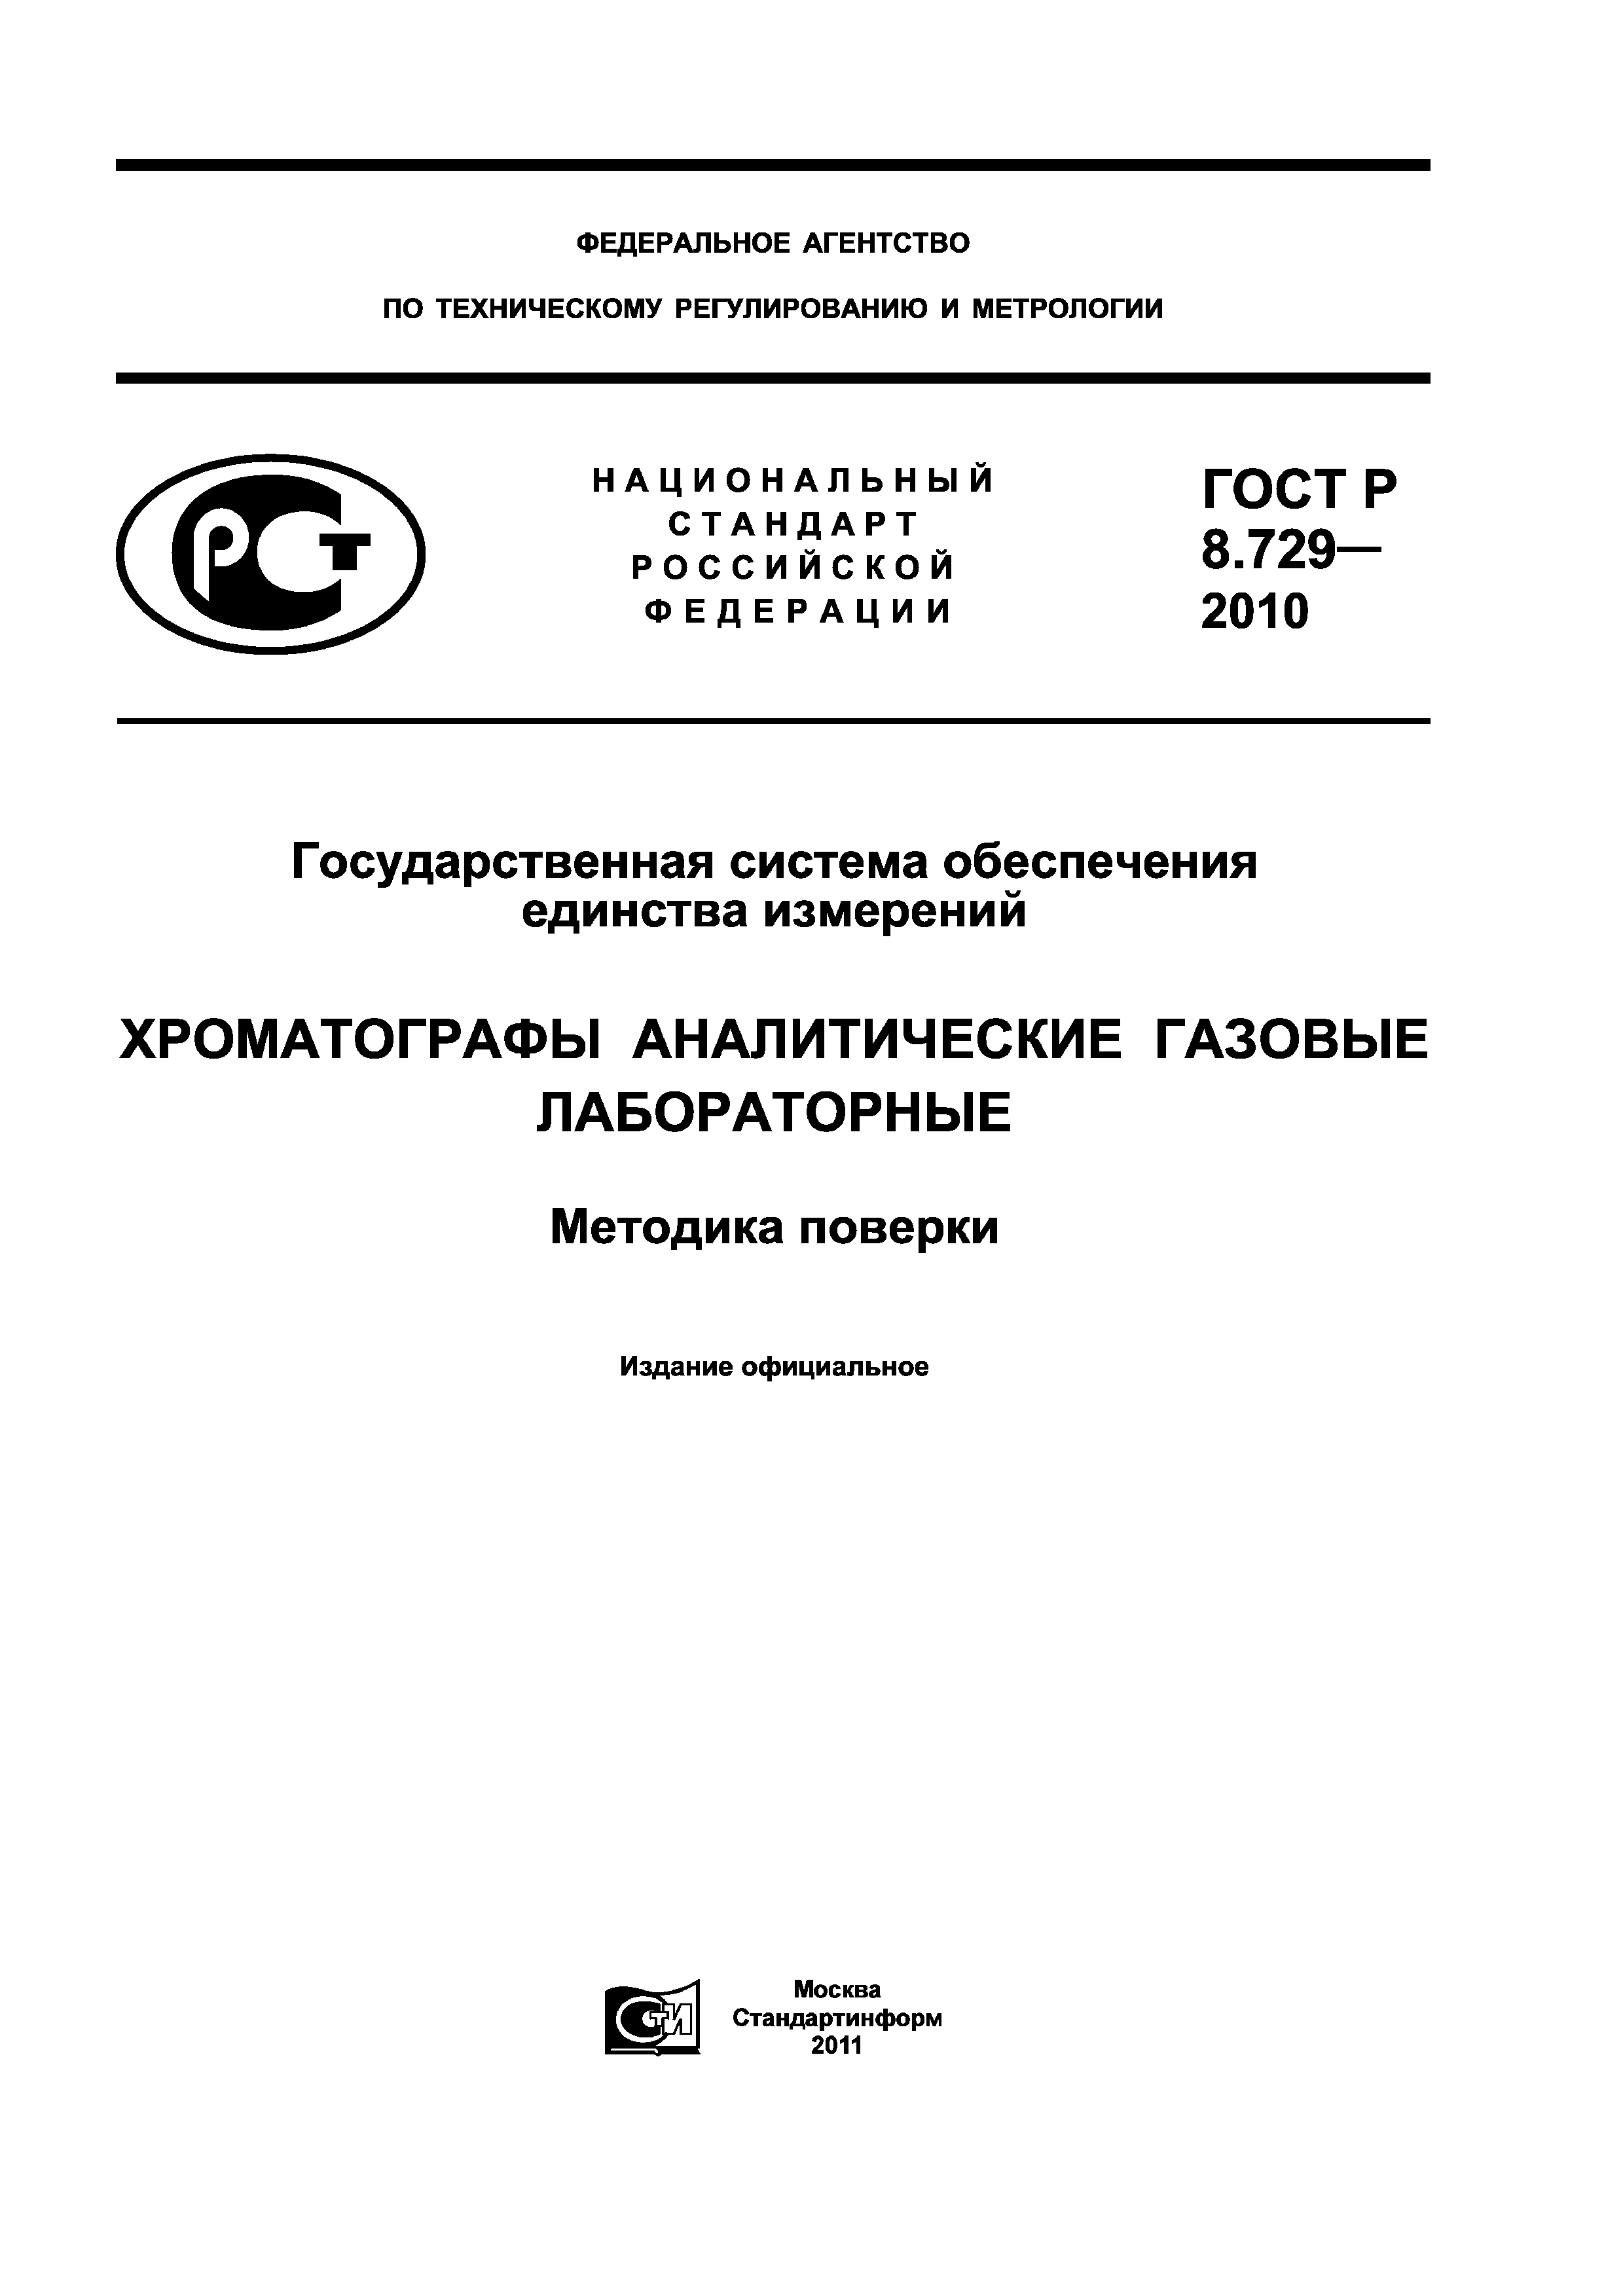 ГОСТ Р 8.729-2010